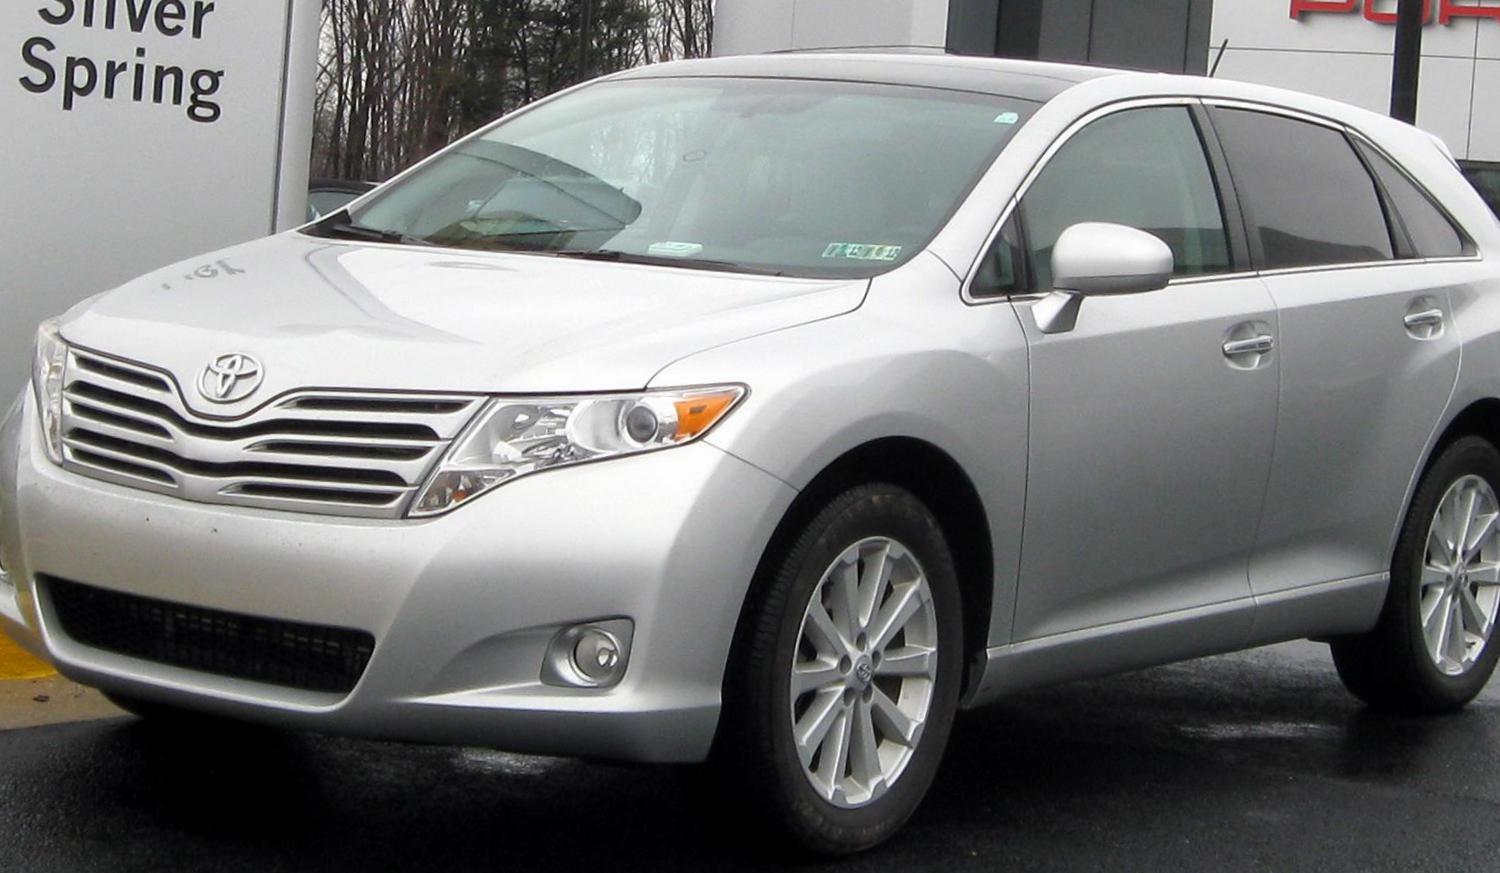 Toyota Venza used 2008